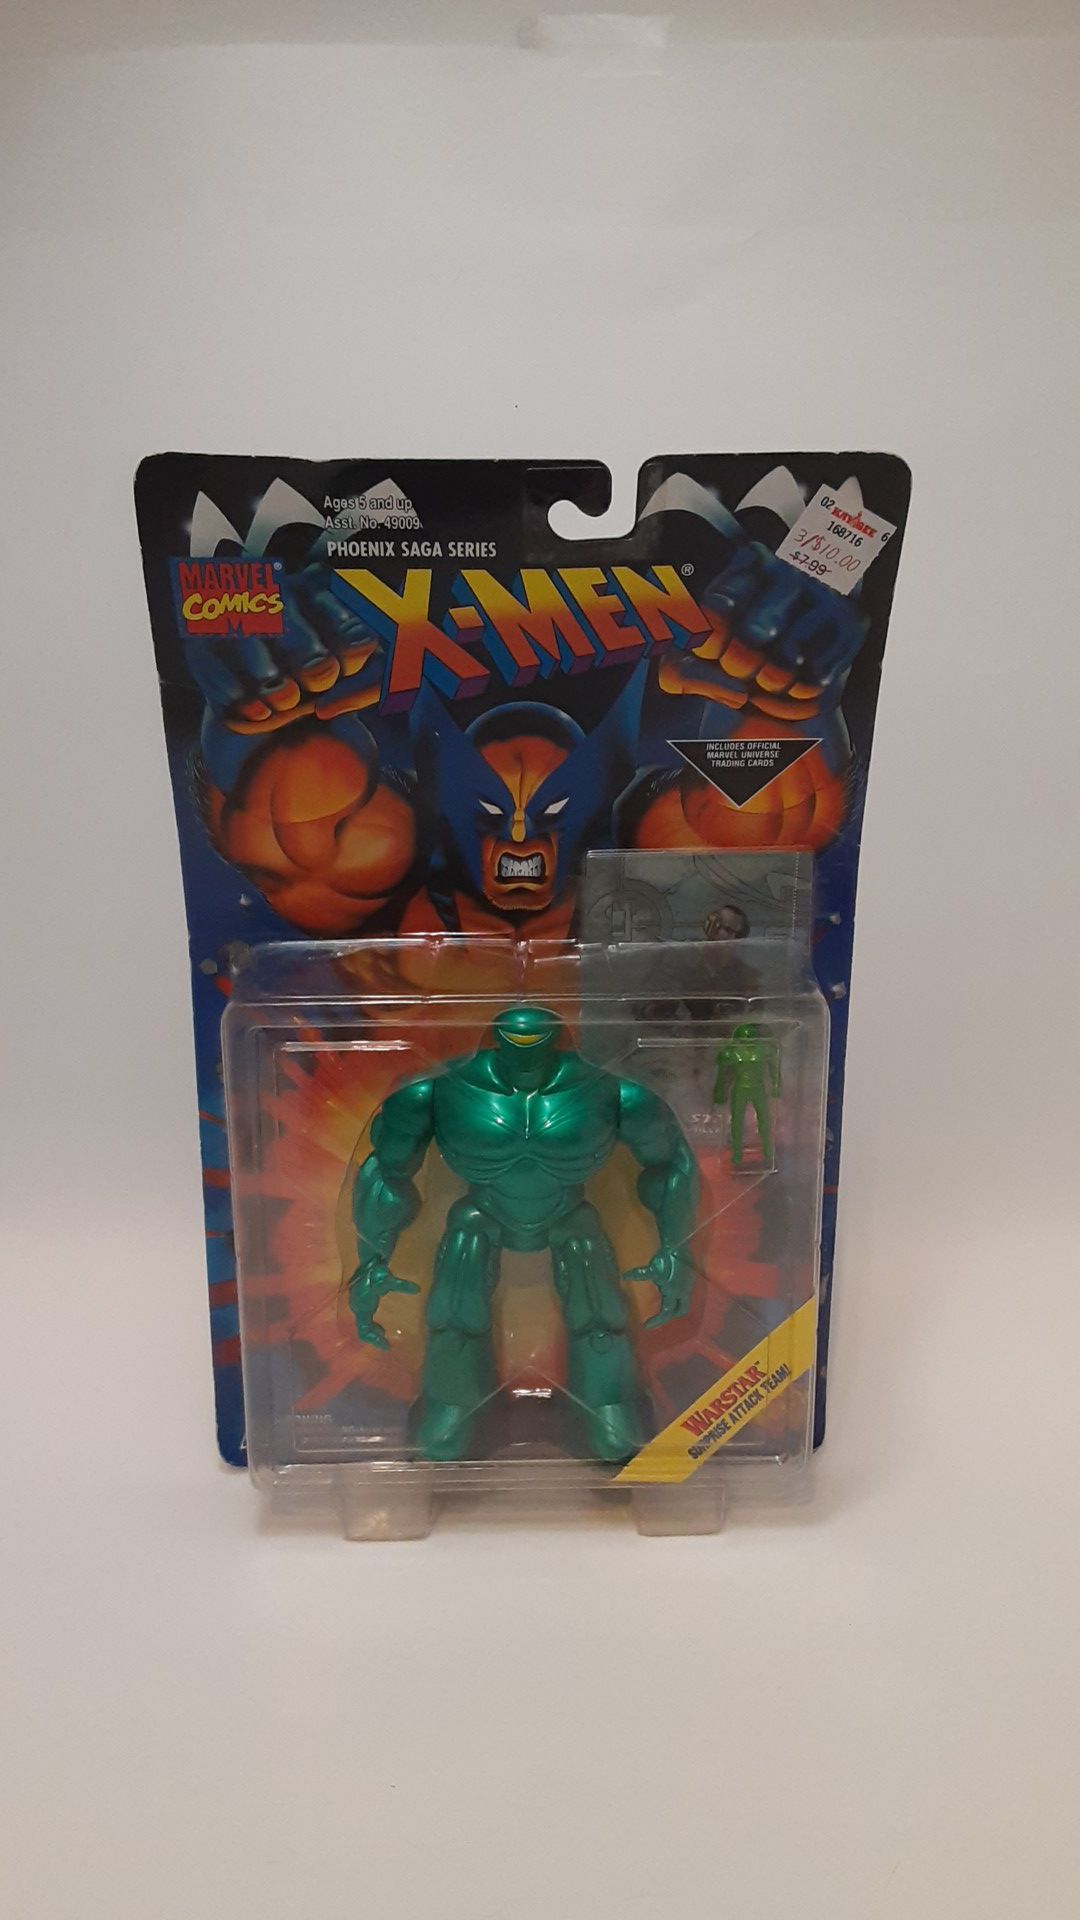 1995 toy Biz Marvel Comics X-Men figure warstar